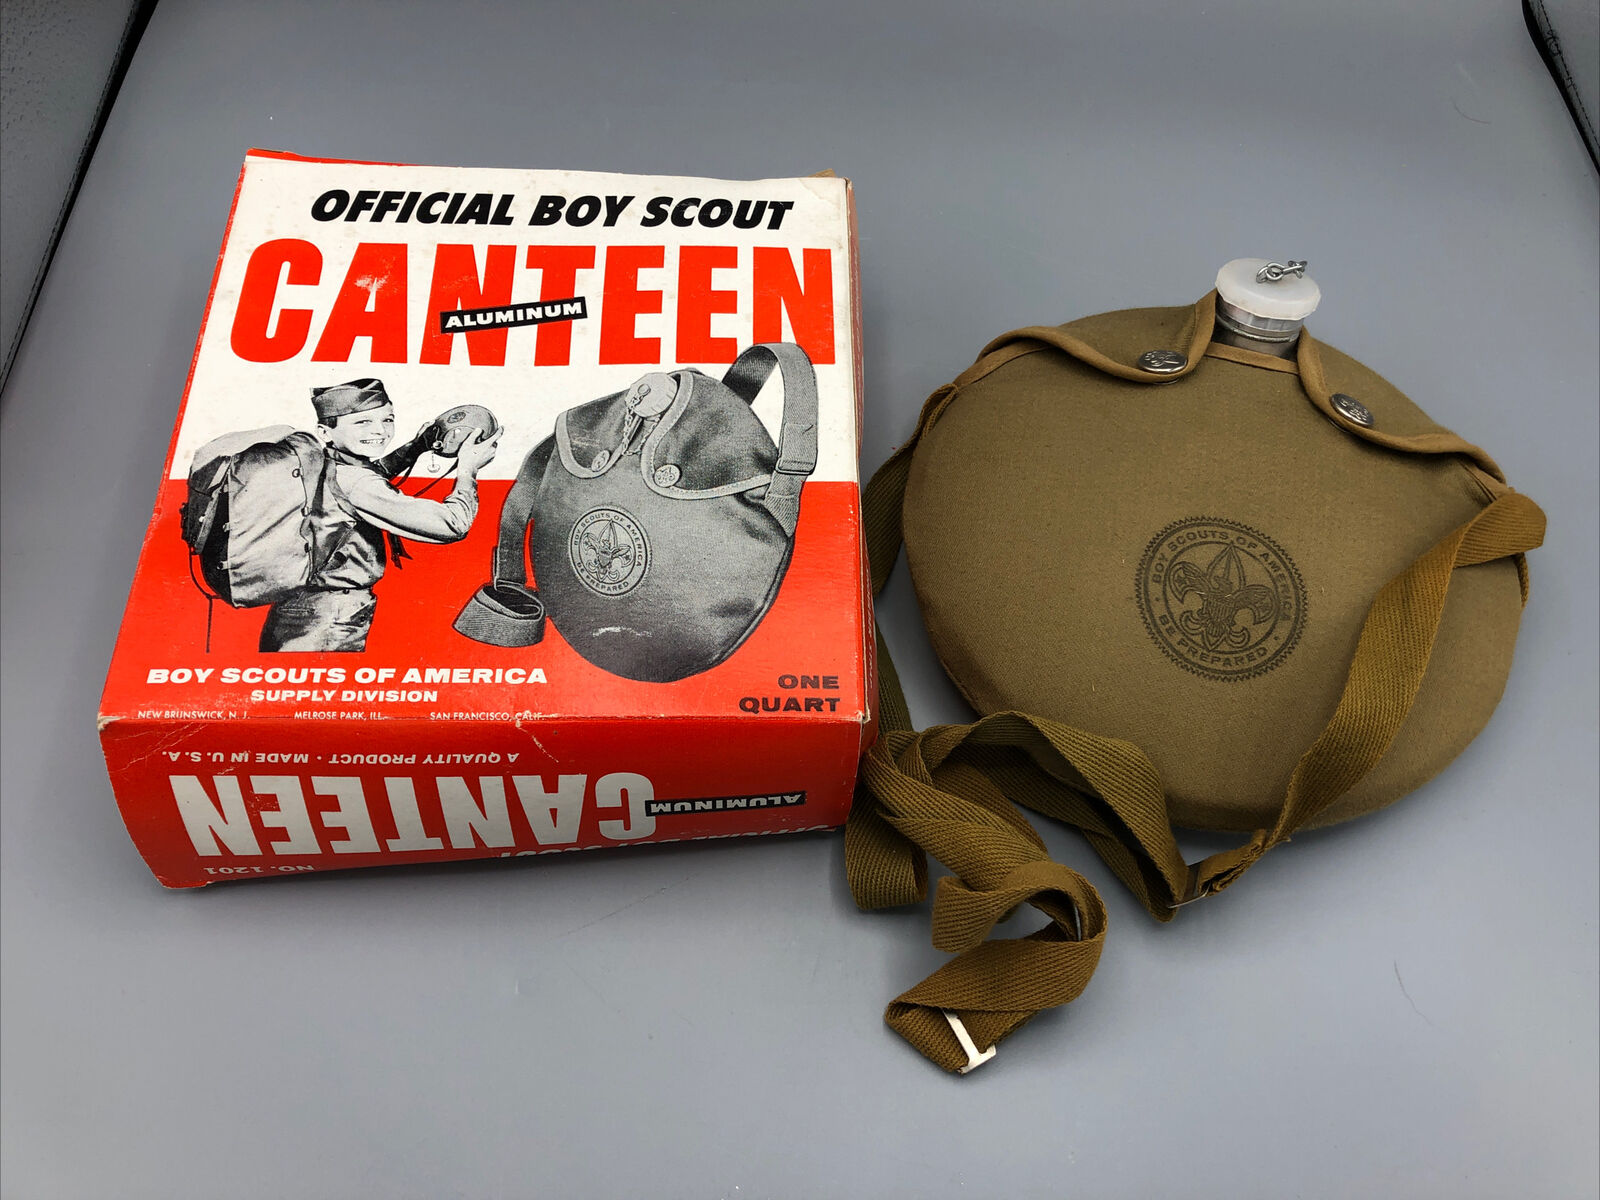 Vintage Official Boy Scout Aluminum Canteen One Quart - New Original Box No.1201